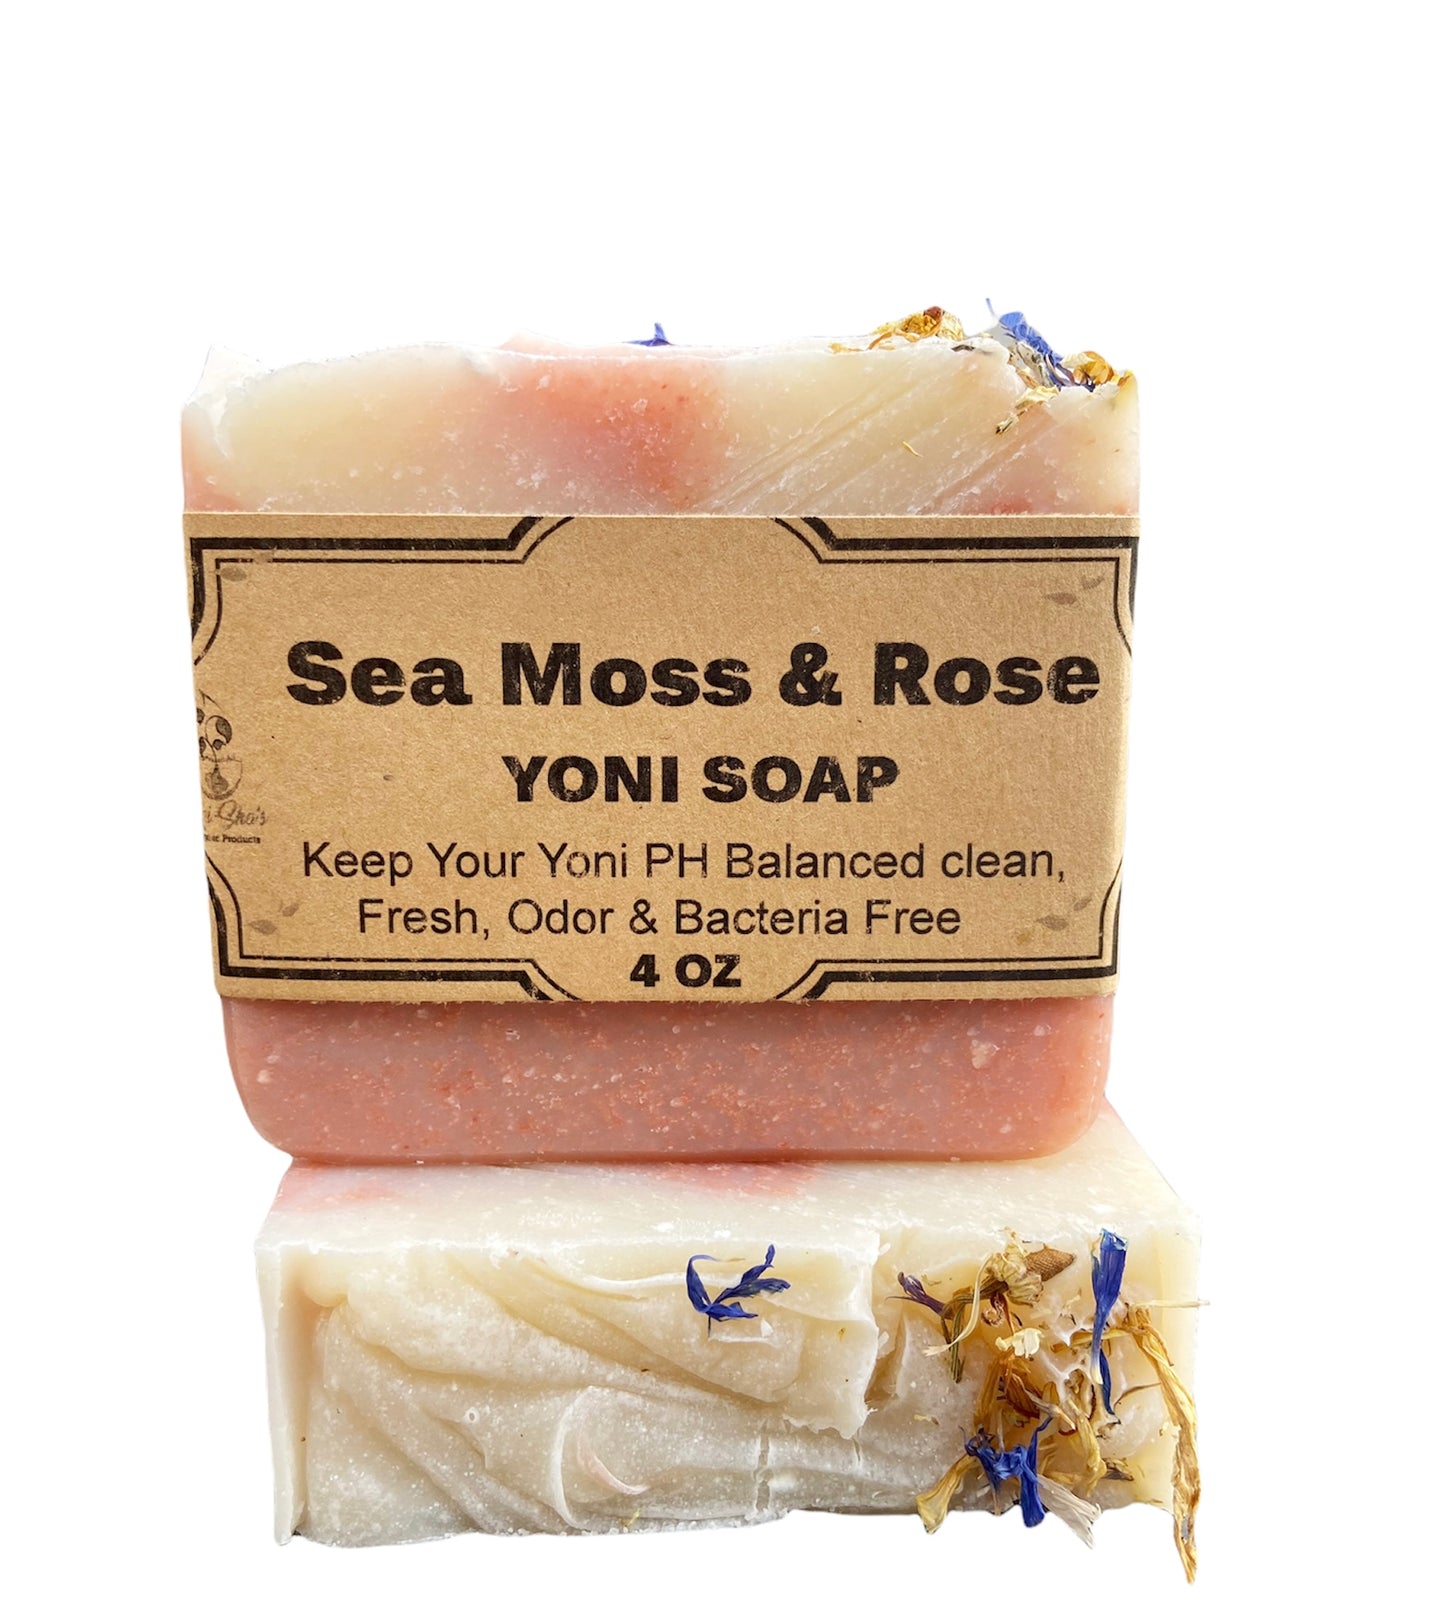 Sea Moss & Rose Yoni Bar